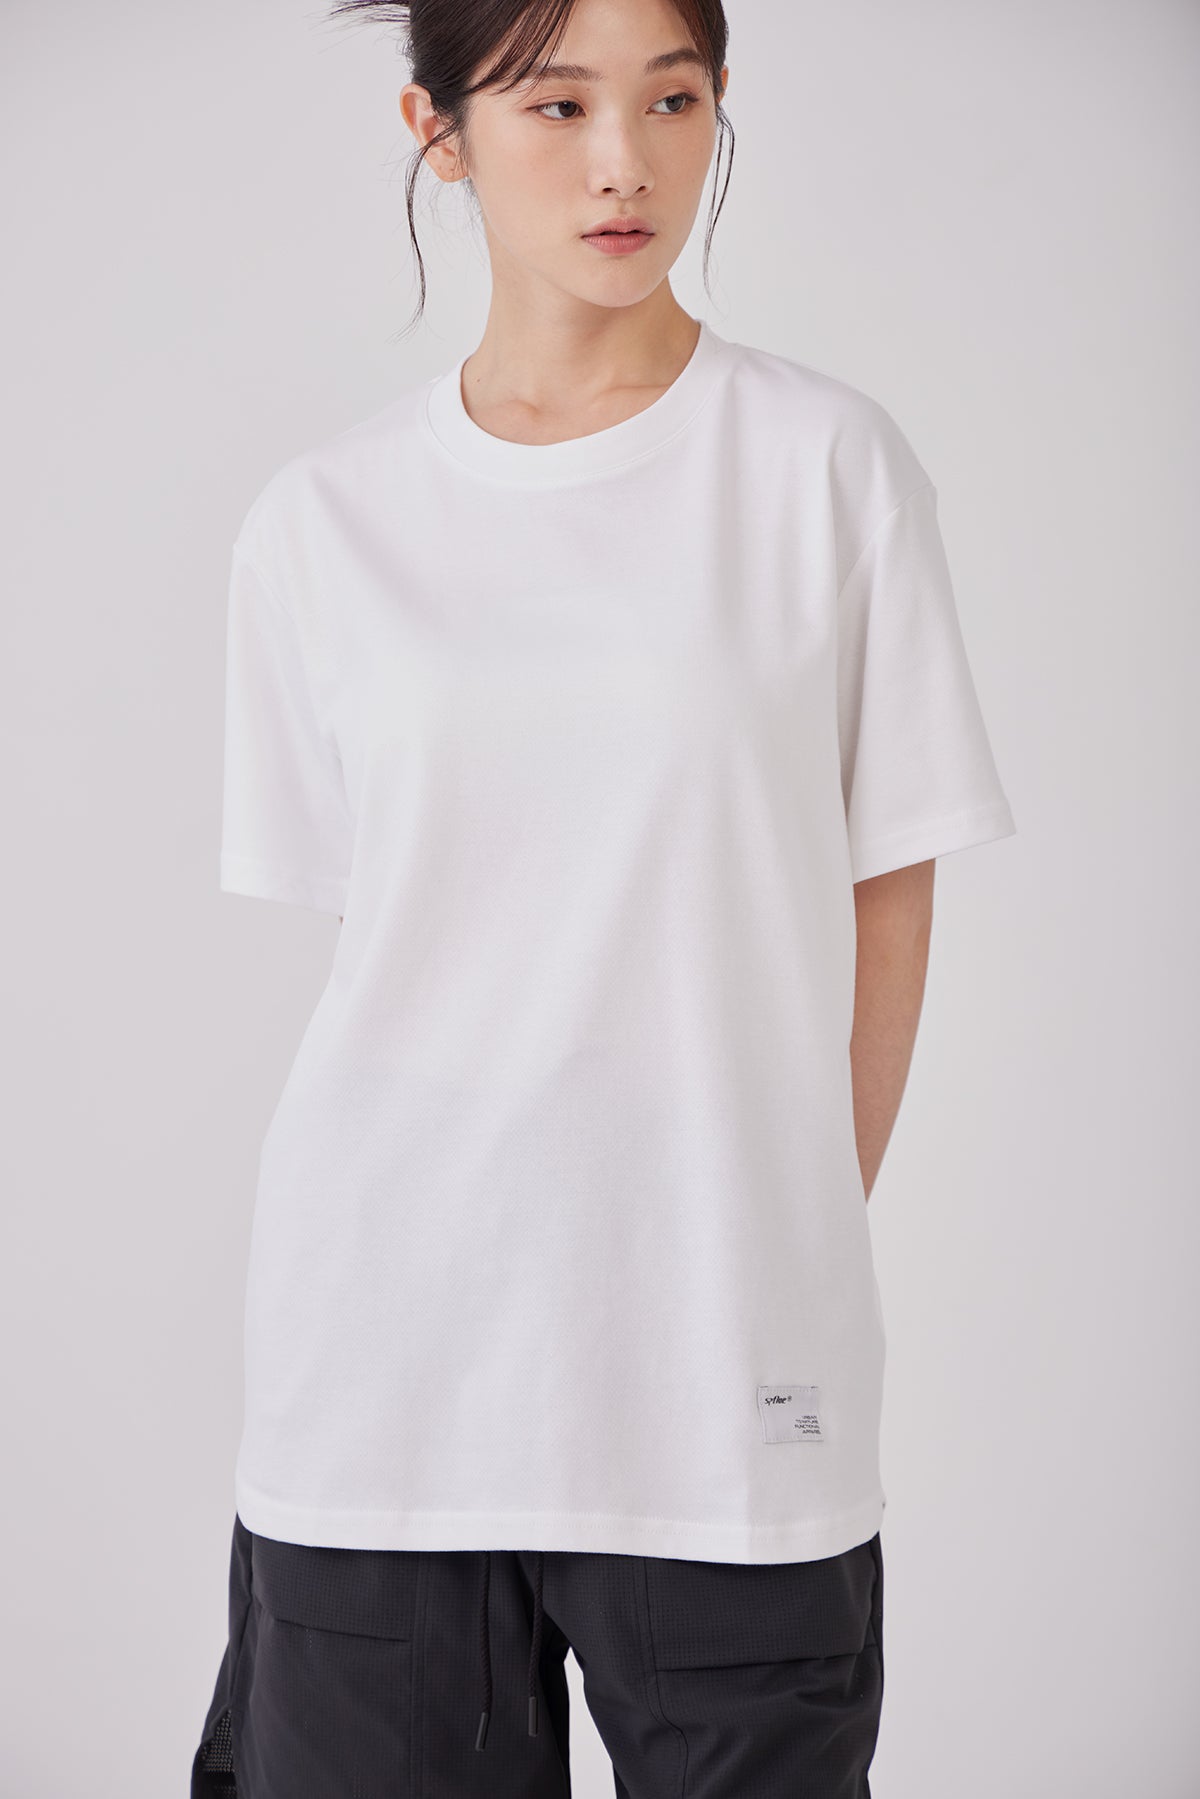 Off-White Daily Basis T-shirt